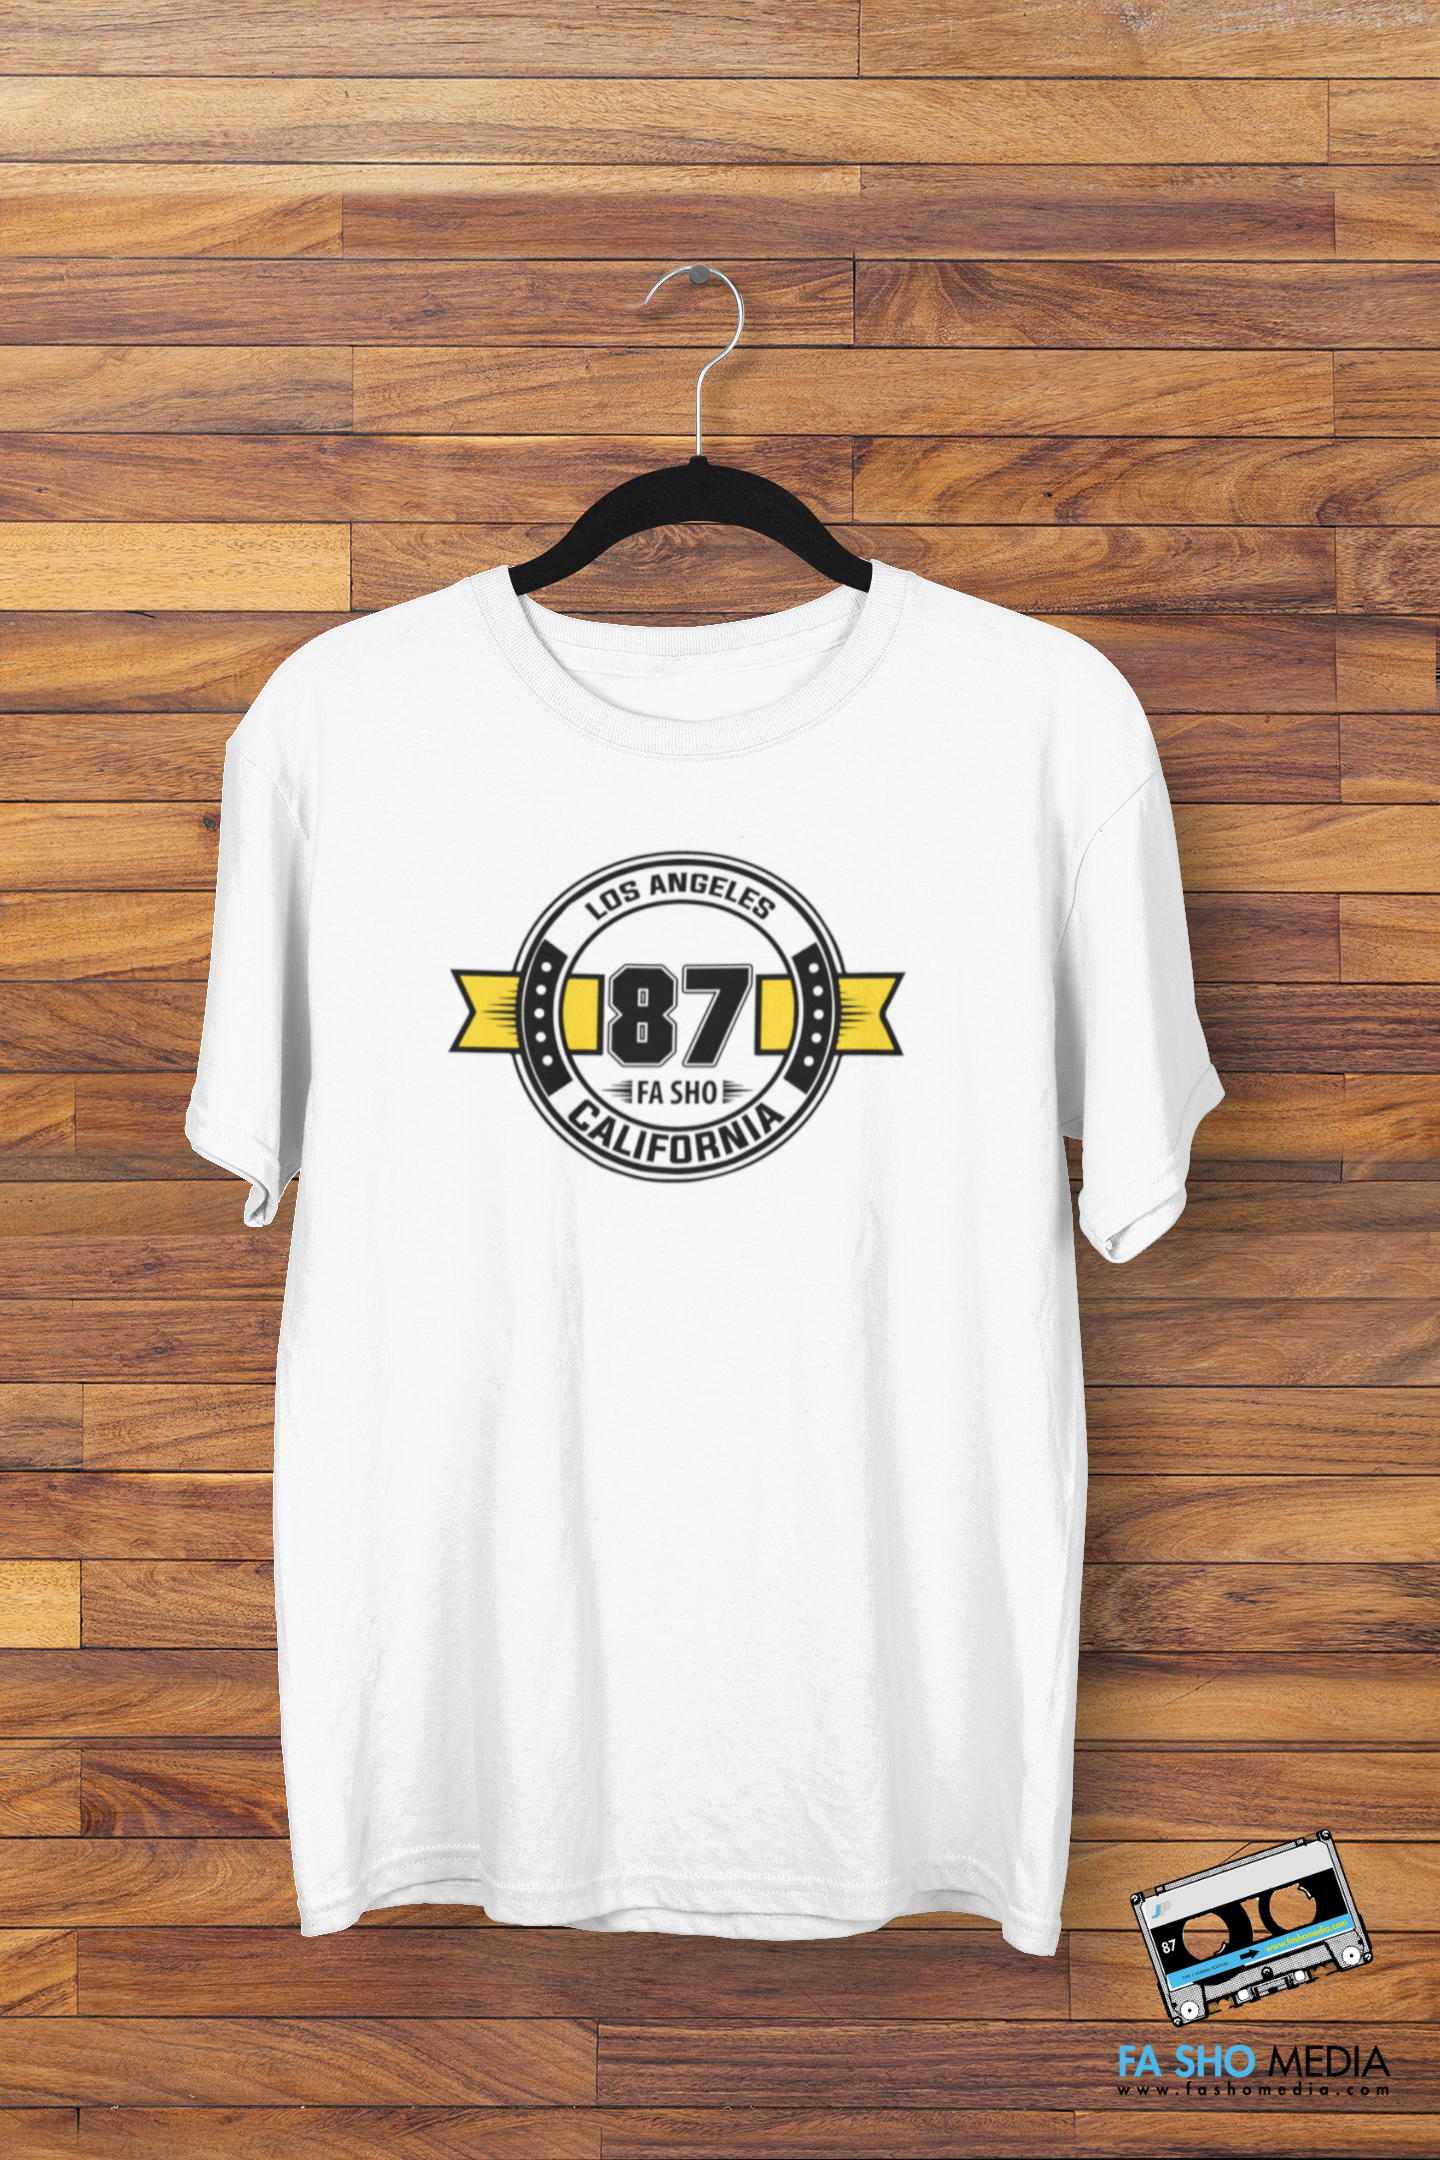 Los Angeles 87 Fa Sho Shirt (Men's)